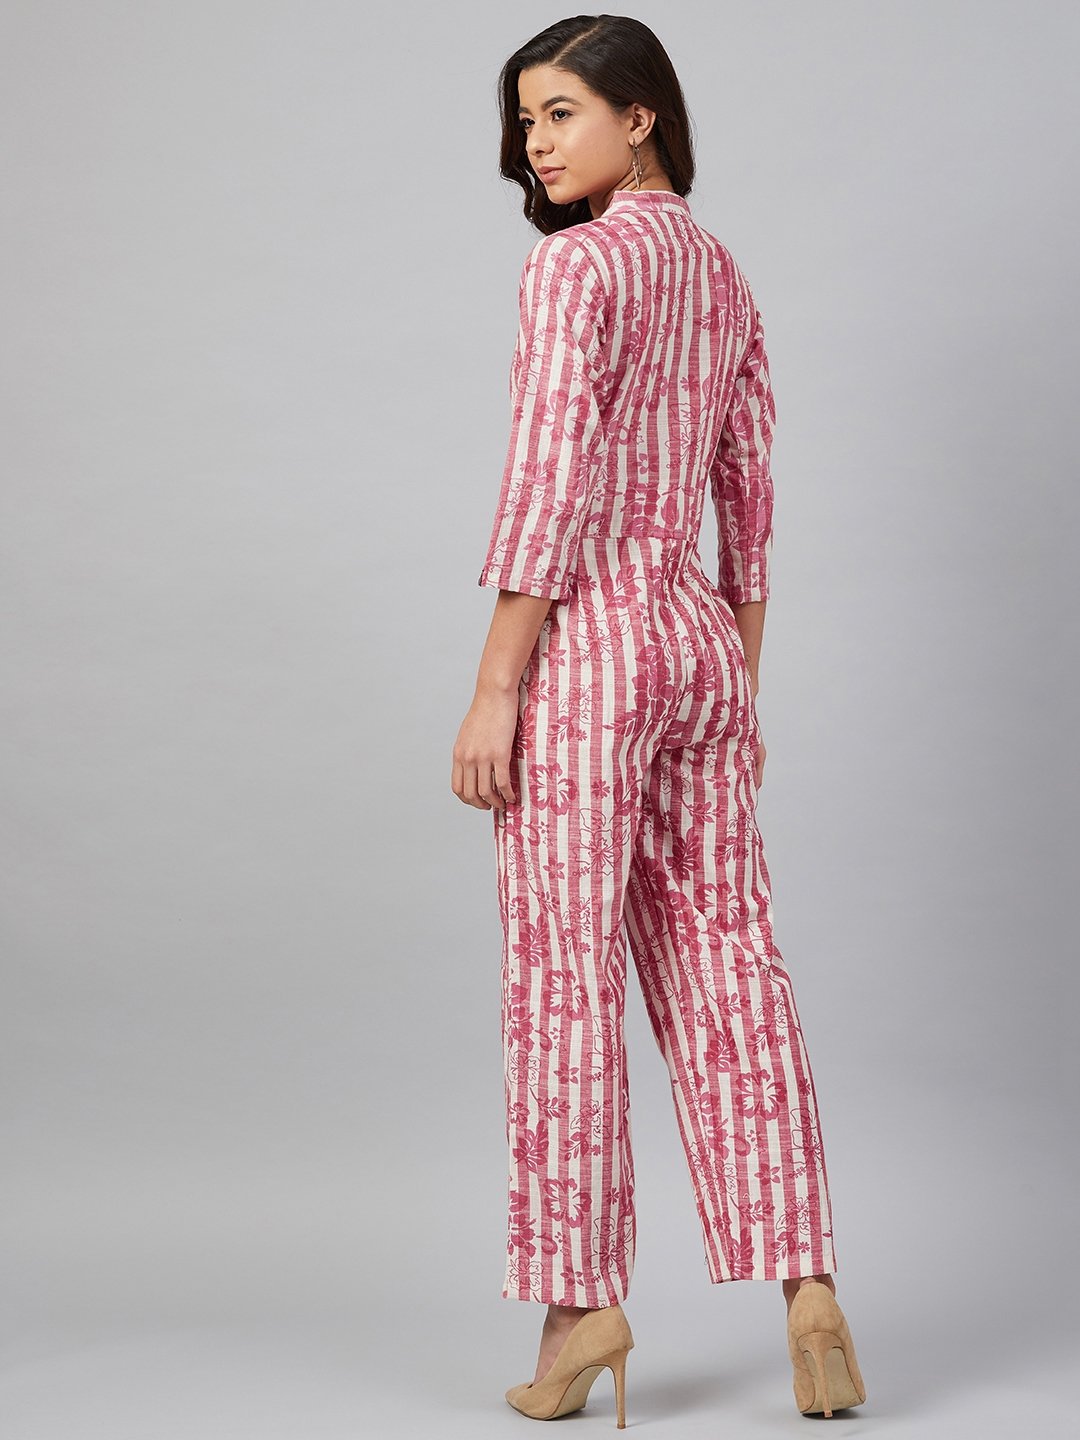 Women's Off-White & Pink Striped Mandarin Collar Basic Jumpsuit - Jompers